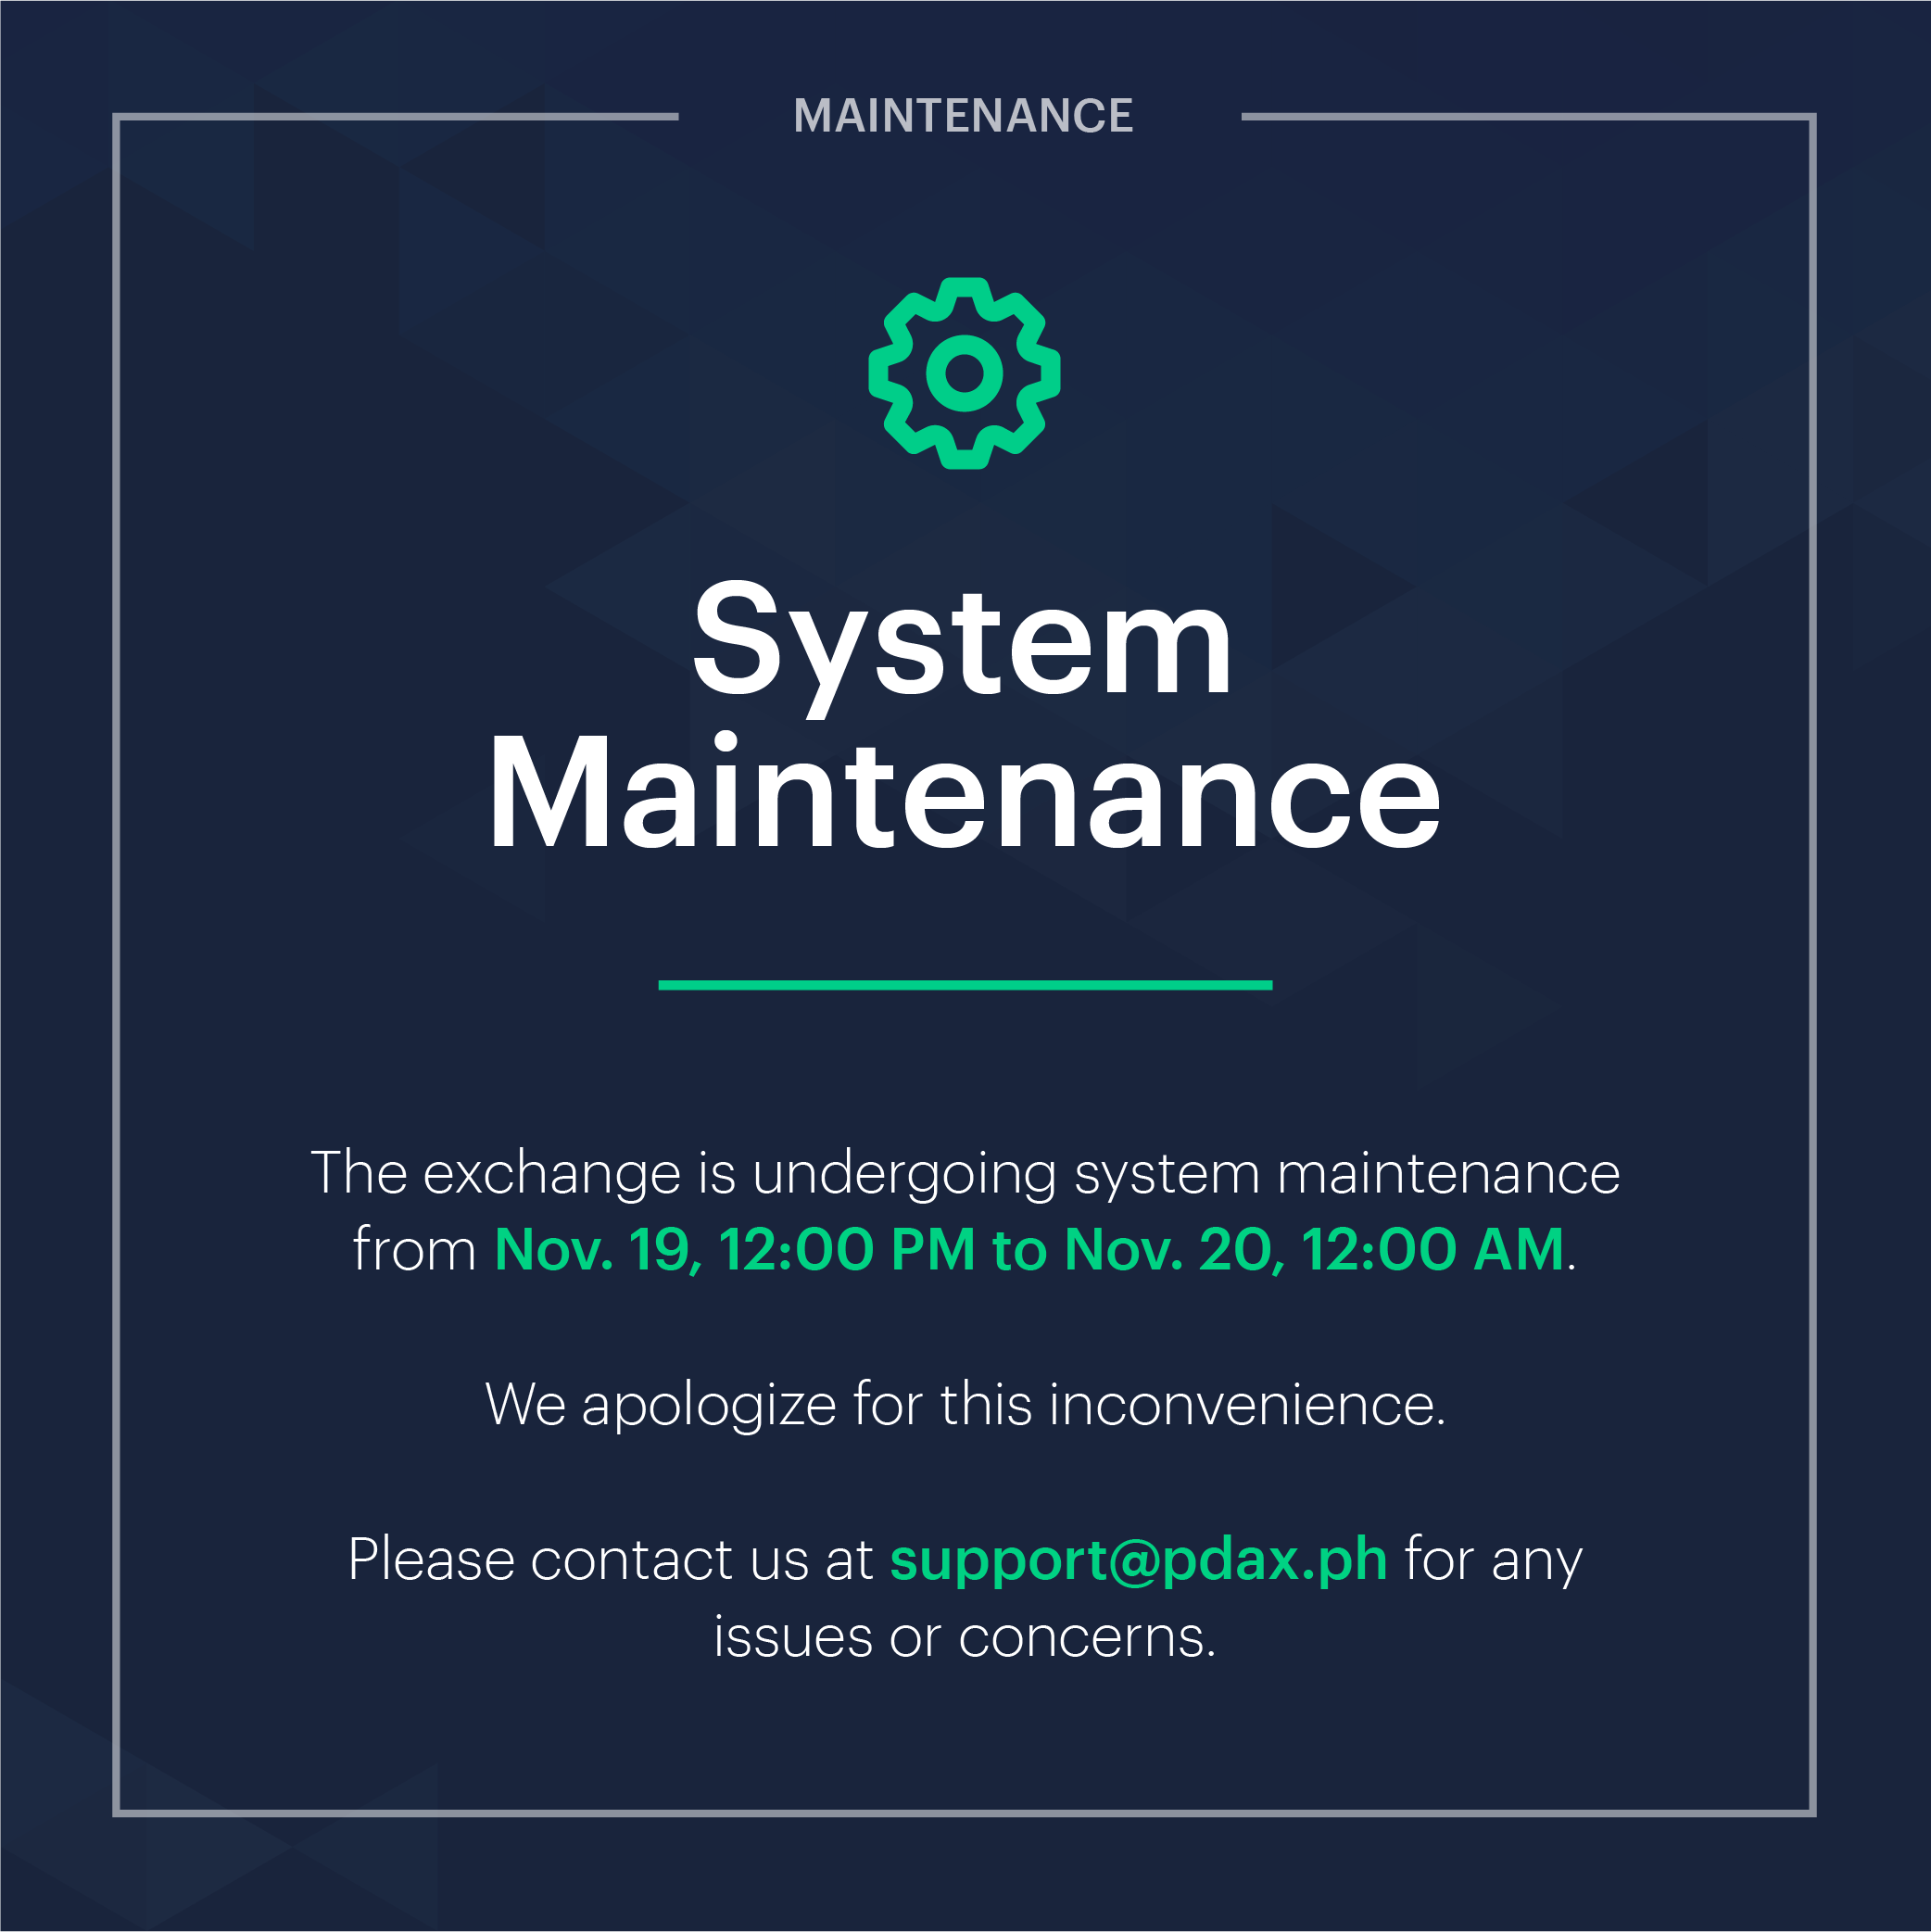 PDAX_System_Maintenance_November_19__2019.png